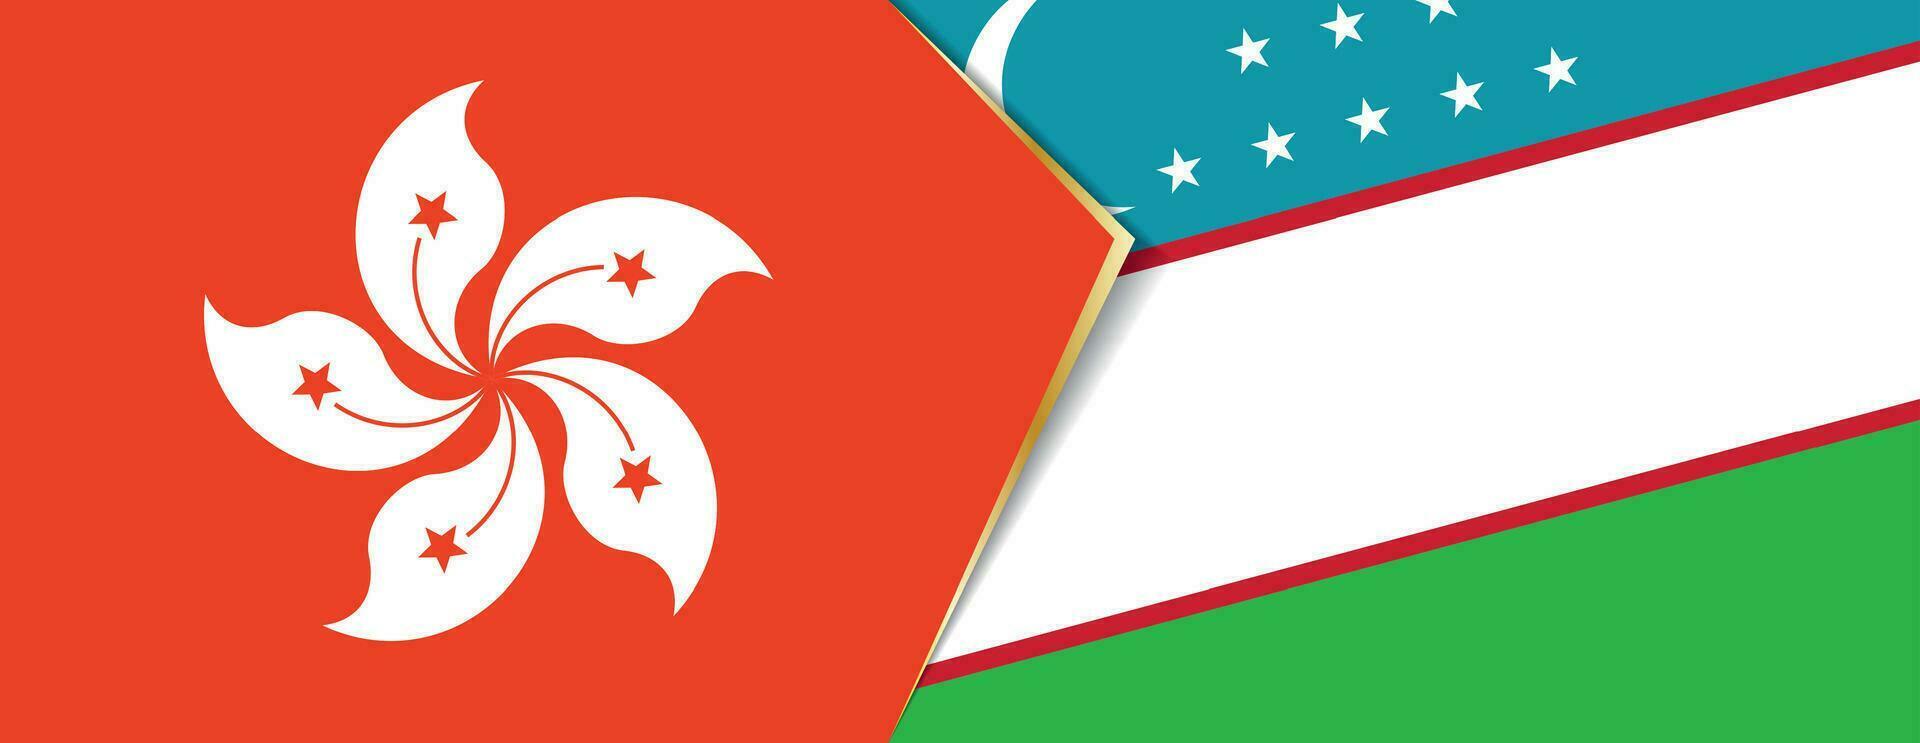 Hong Kong and Uzbekistan flags, two vector flags.